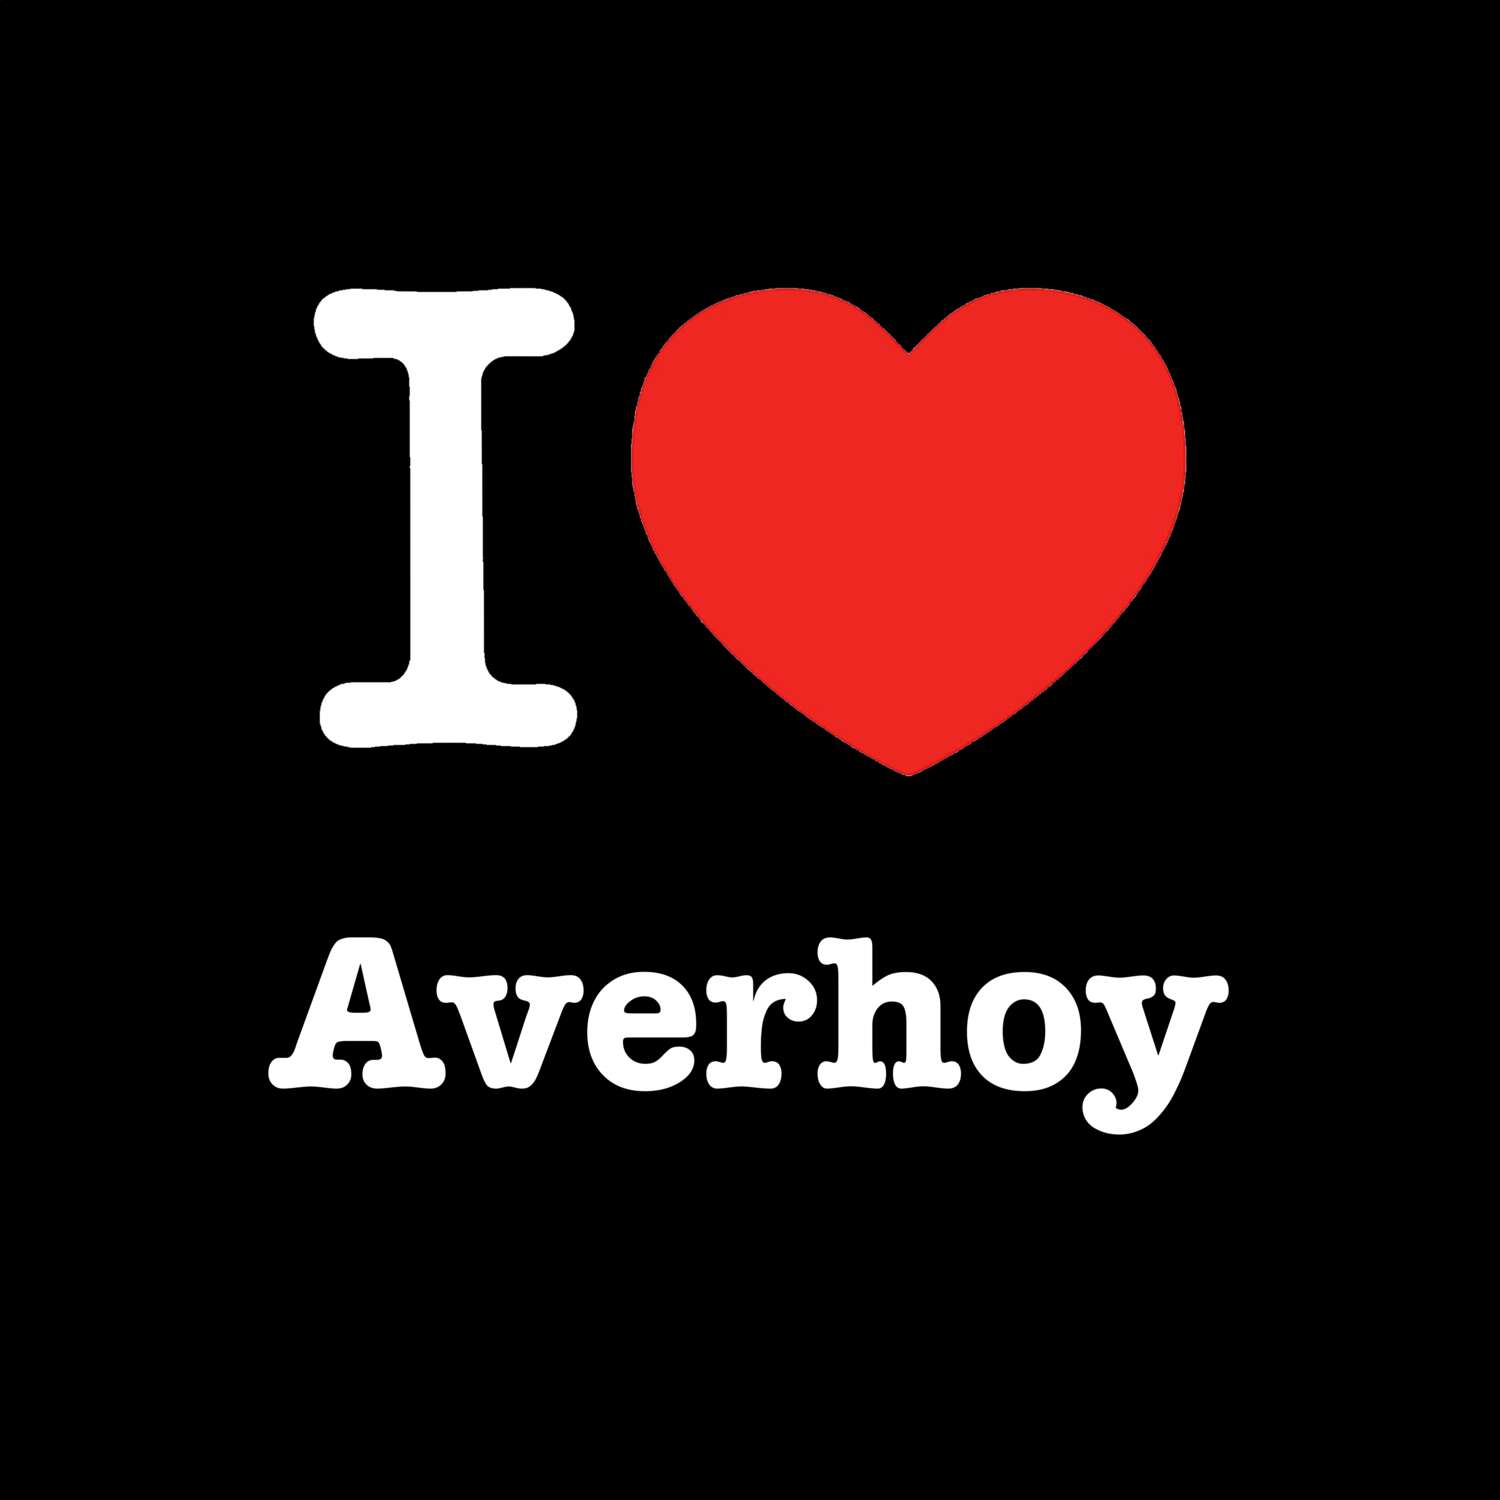 Averhoy T-Shirt »I love«